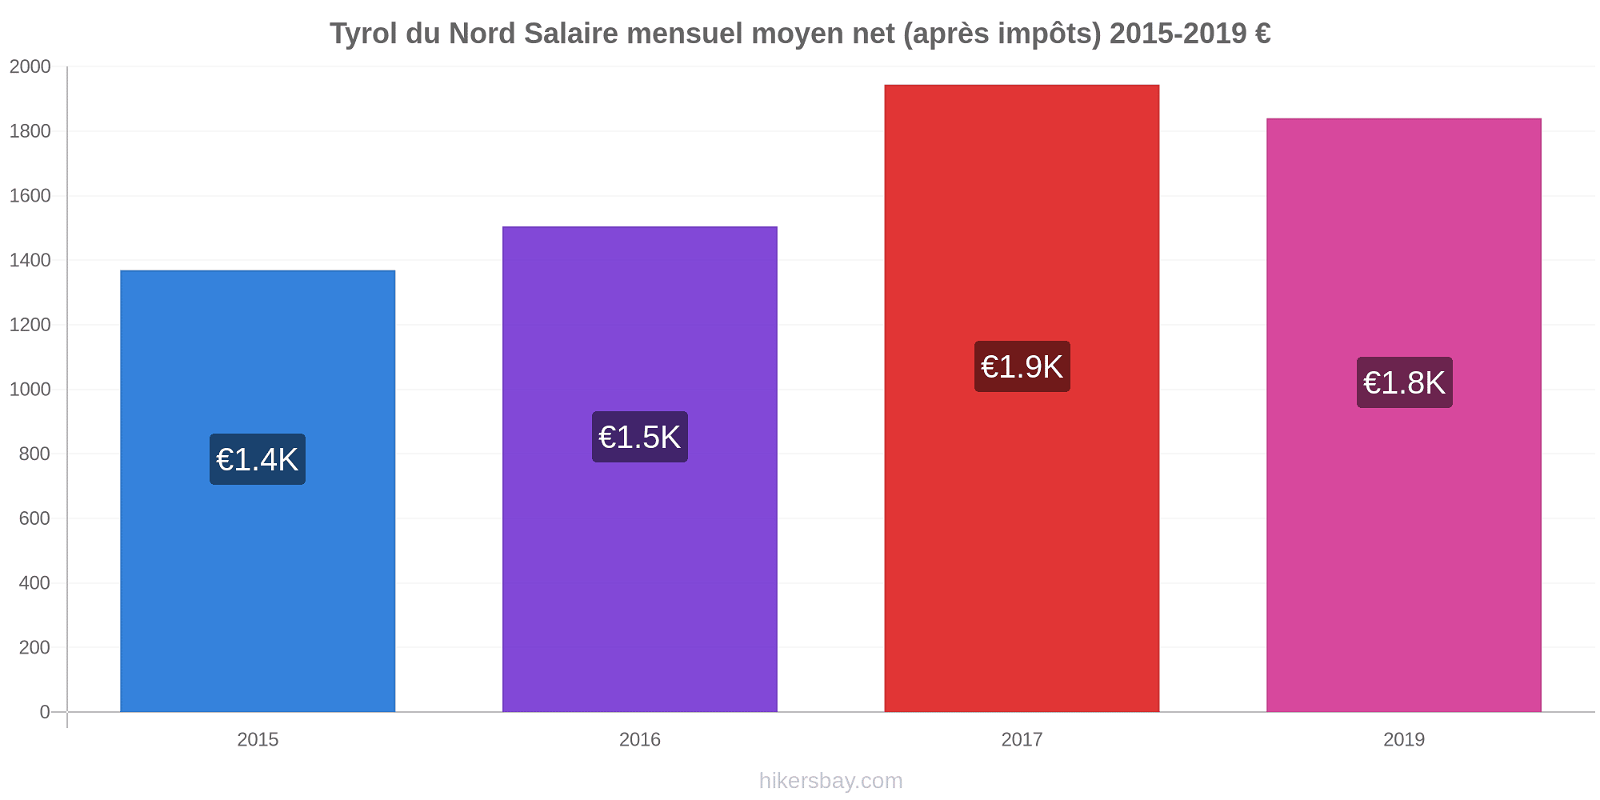 Tyrol du Nord changements de prix Salaire mensuel Net (après impôts) hikersbay.com